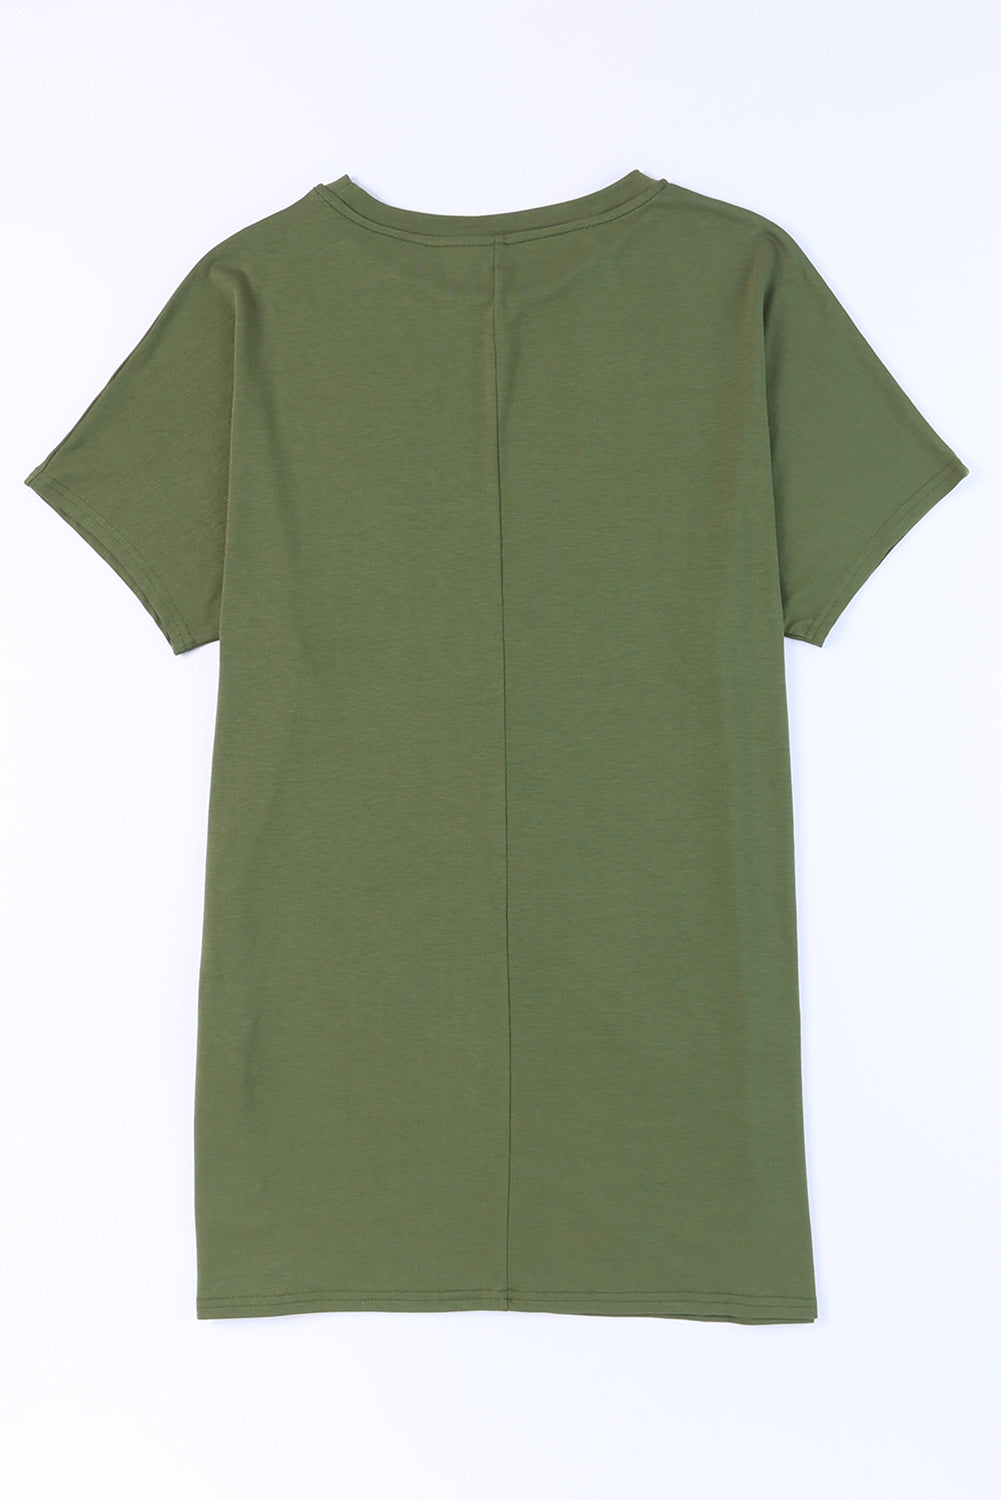 Light Green Side Pockets Short Sleeve Tunic Top